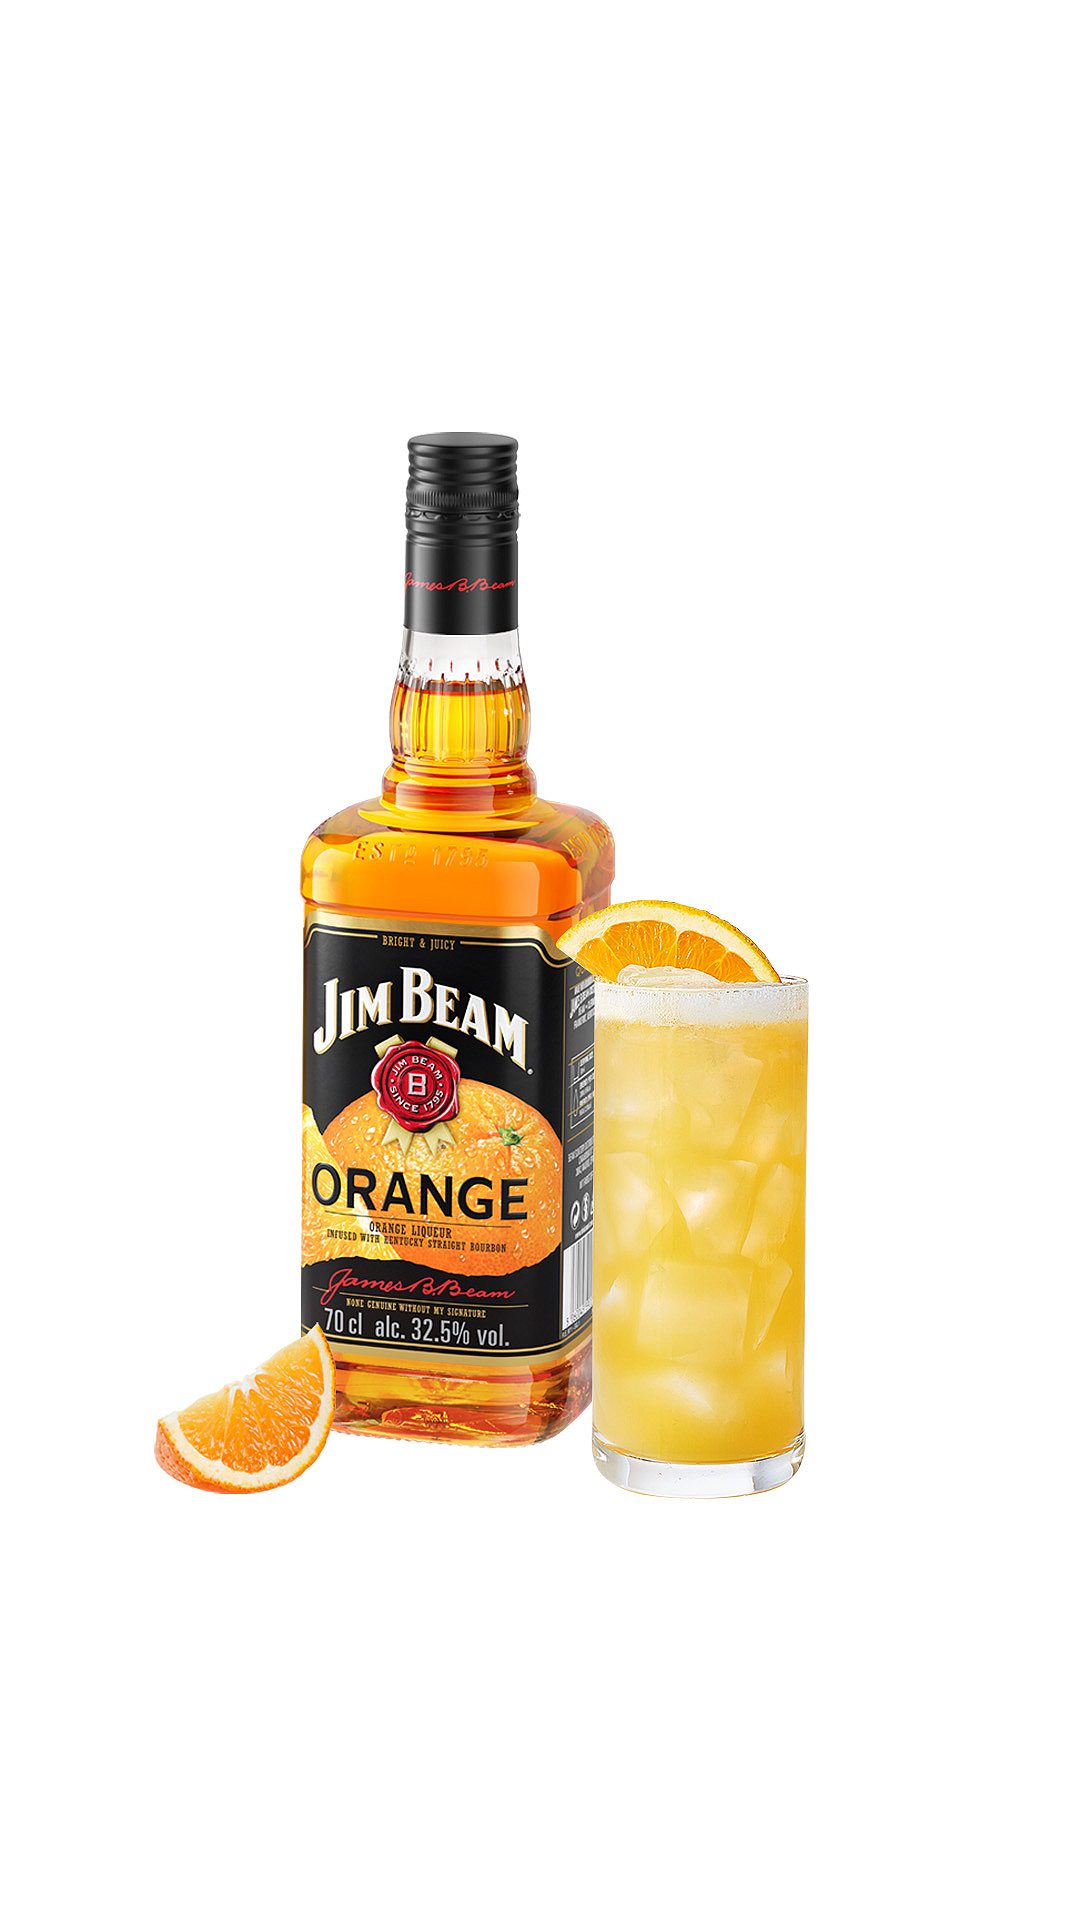 New Jim Beam Orange variant with an orange slice and a serve.